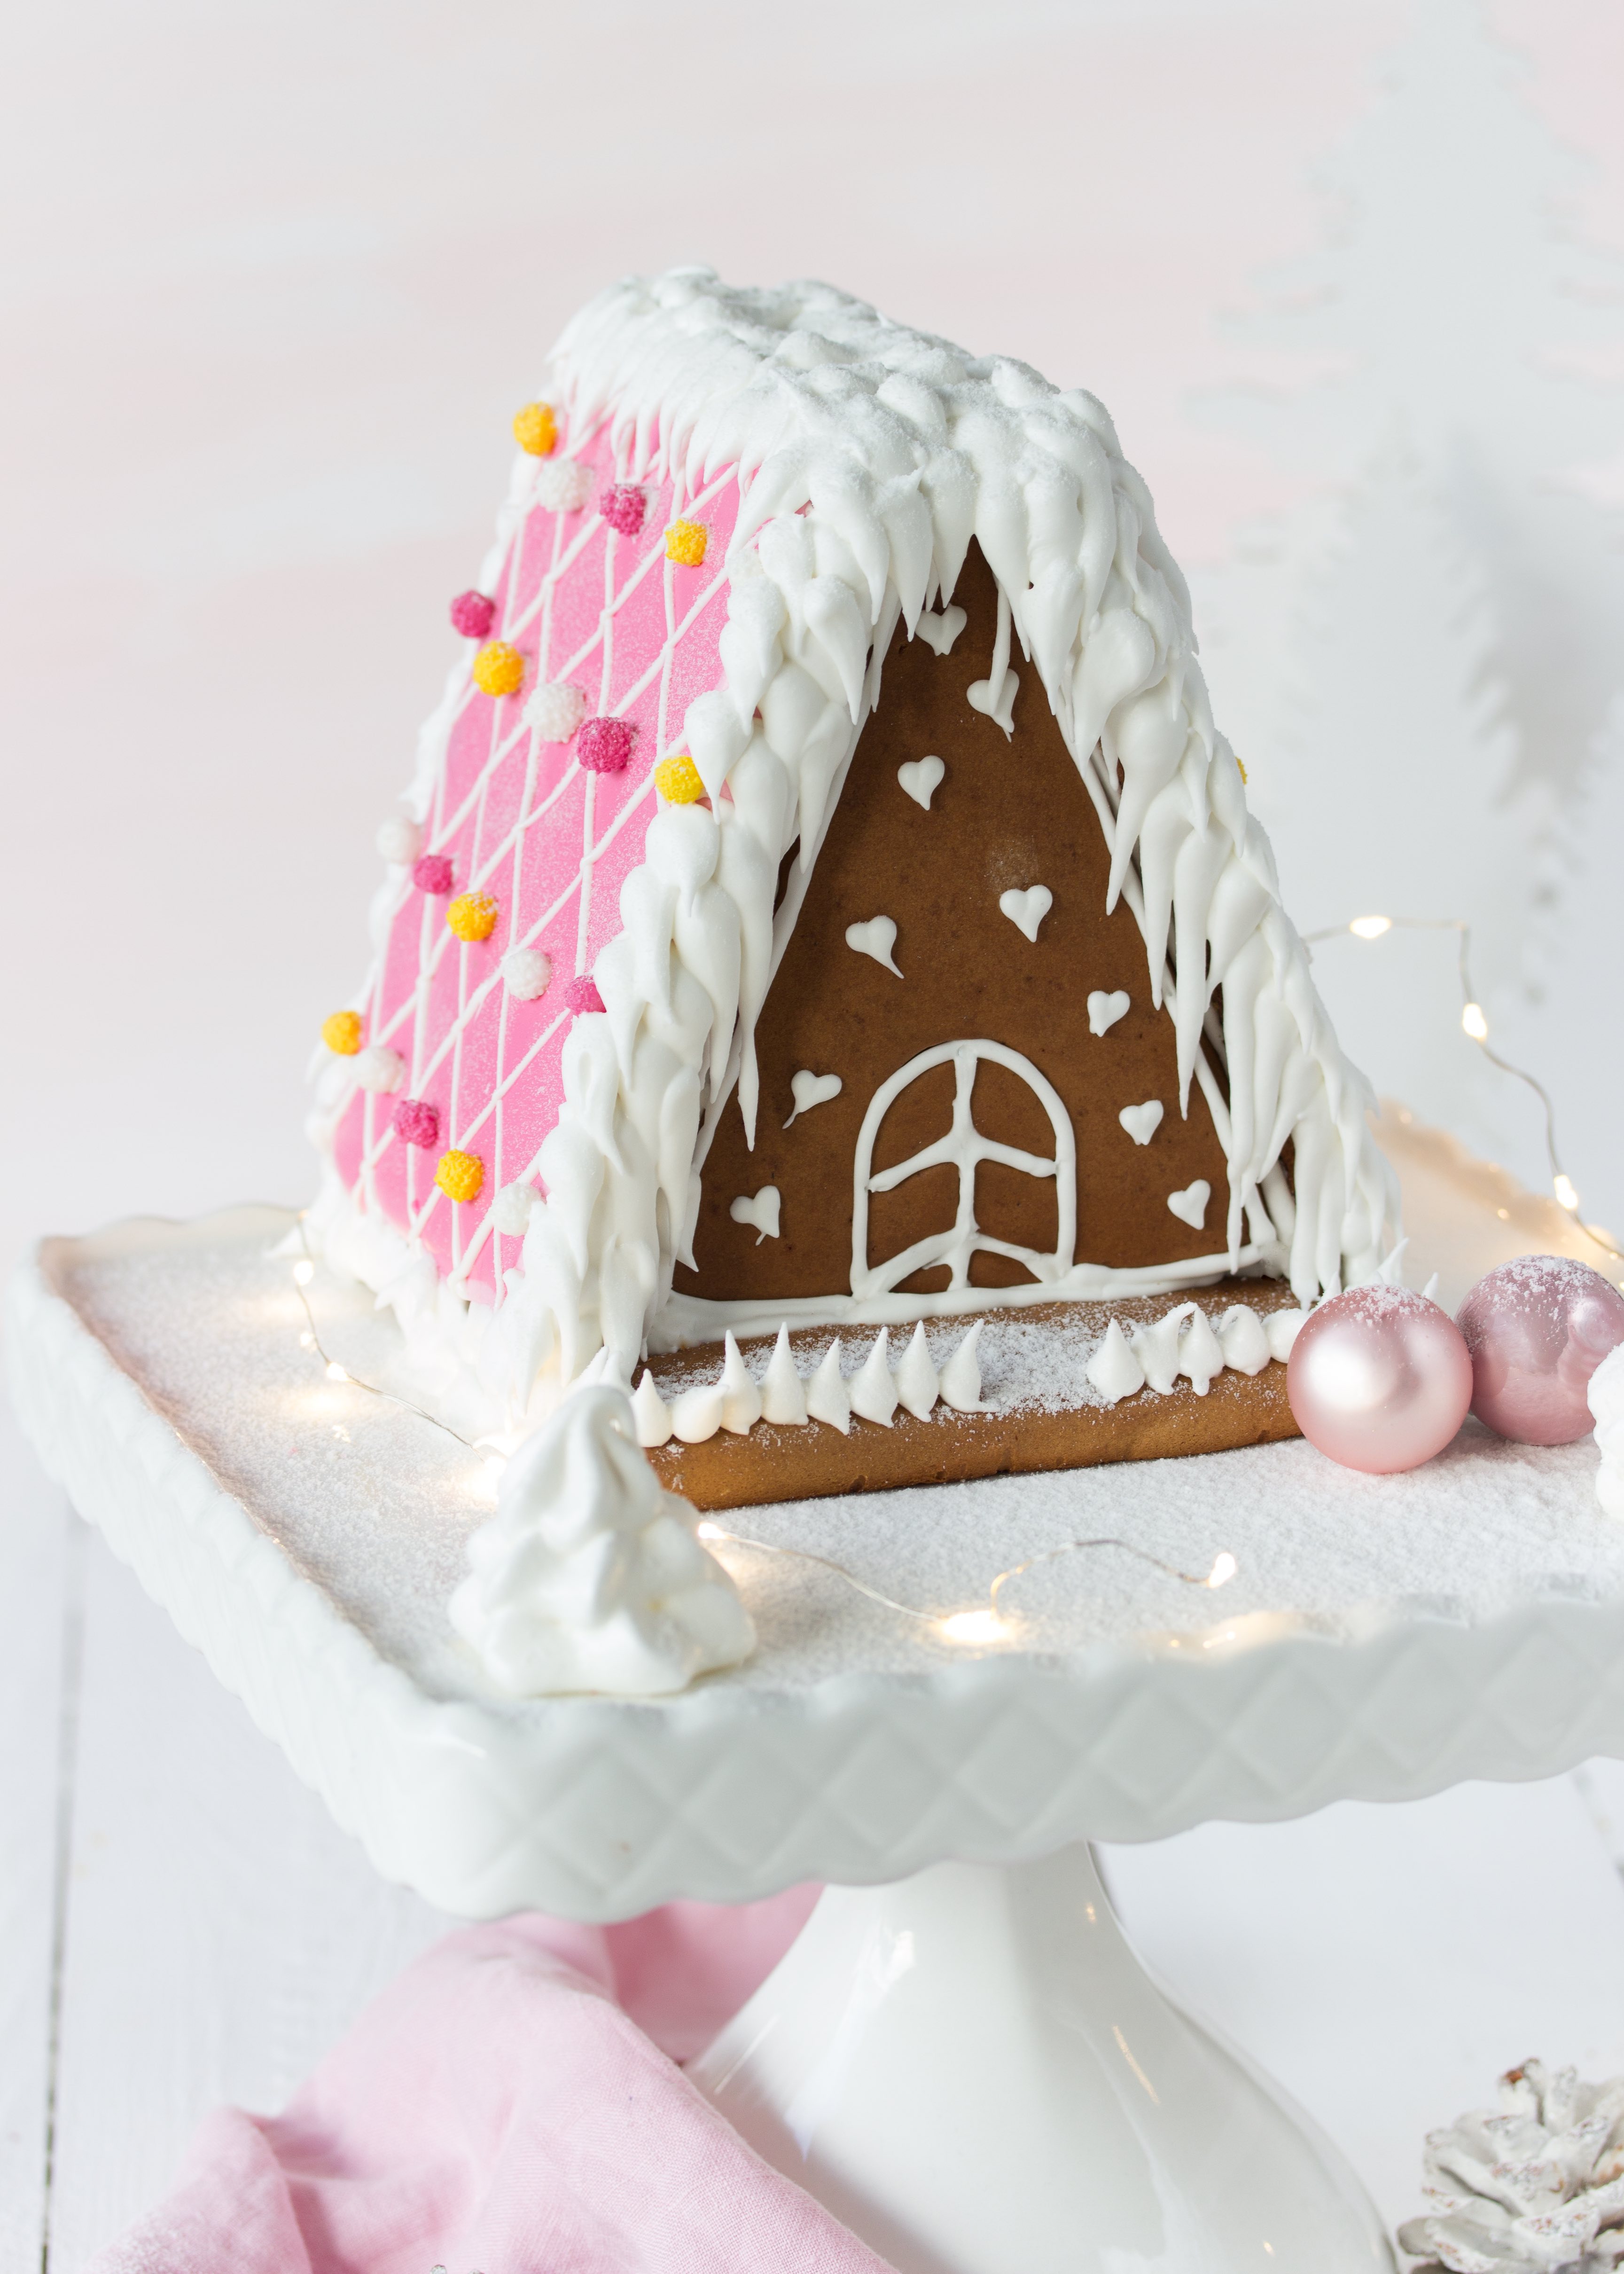 DIY Knusperhäuschen Dekorieren Lebkuchen Gingerbread Weihnachten Christmas